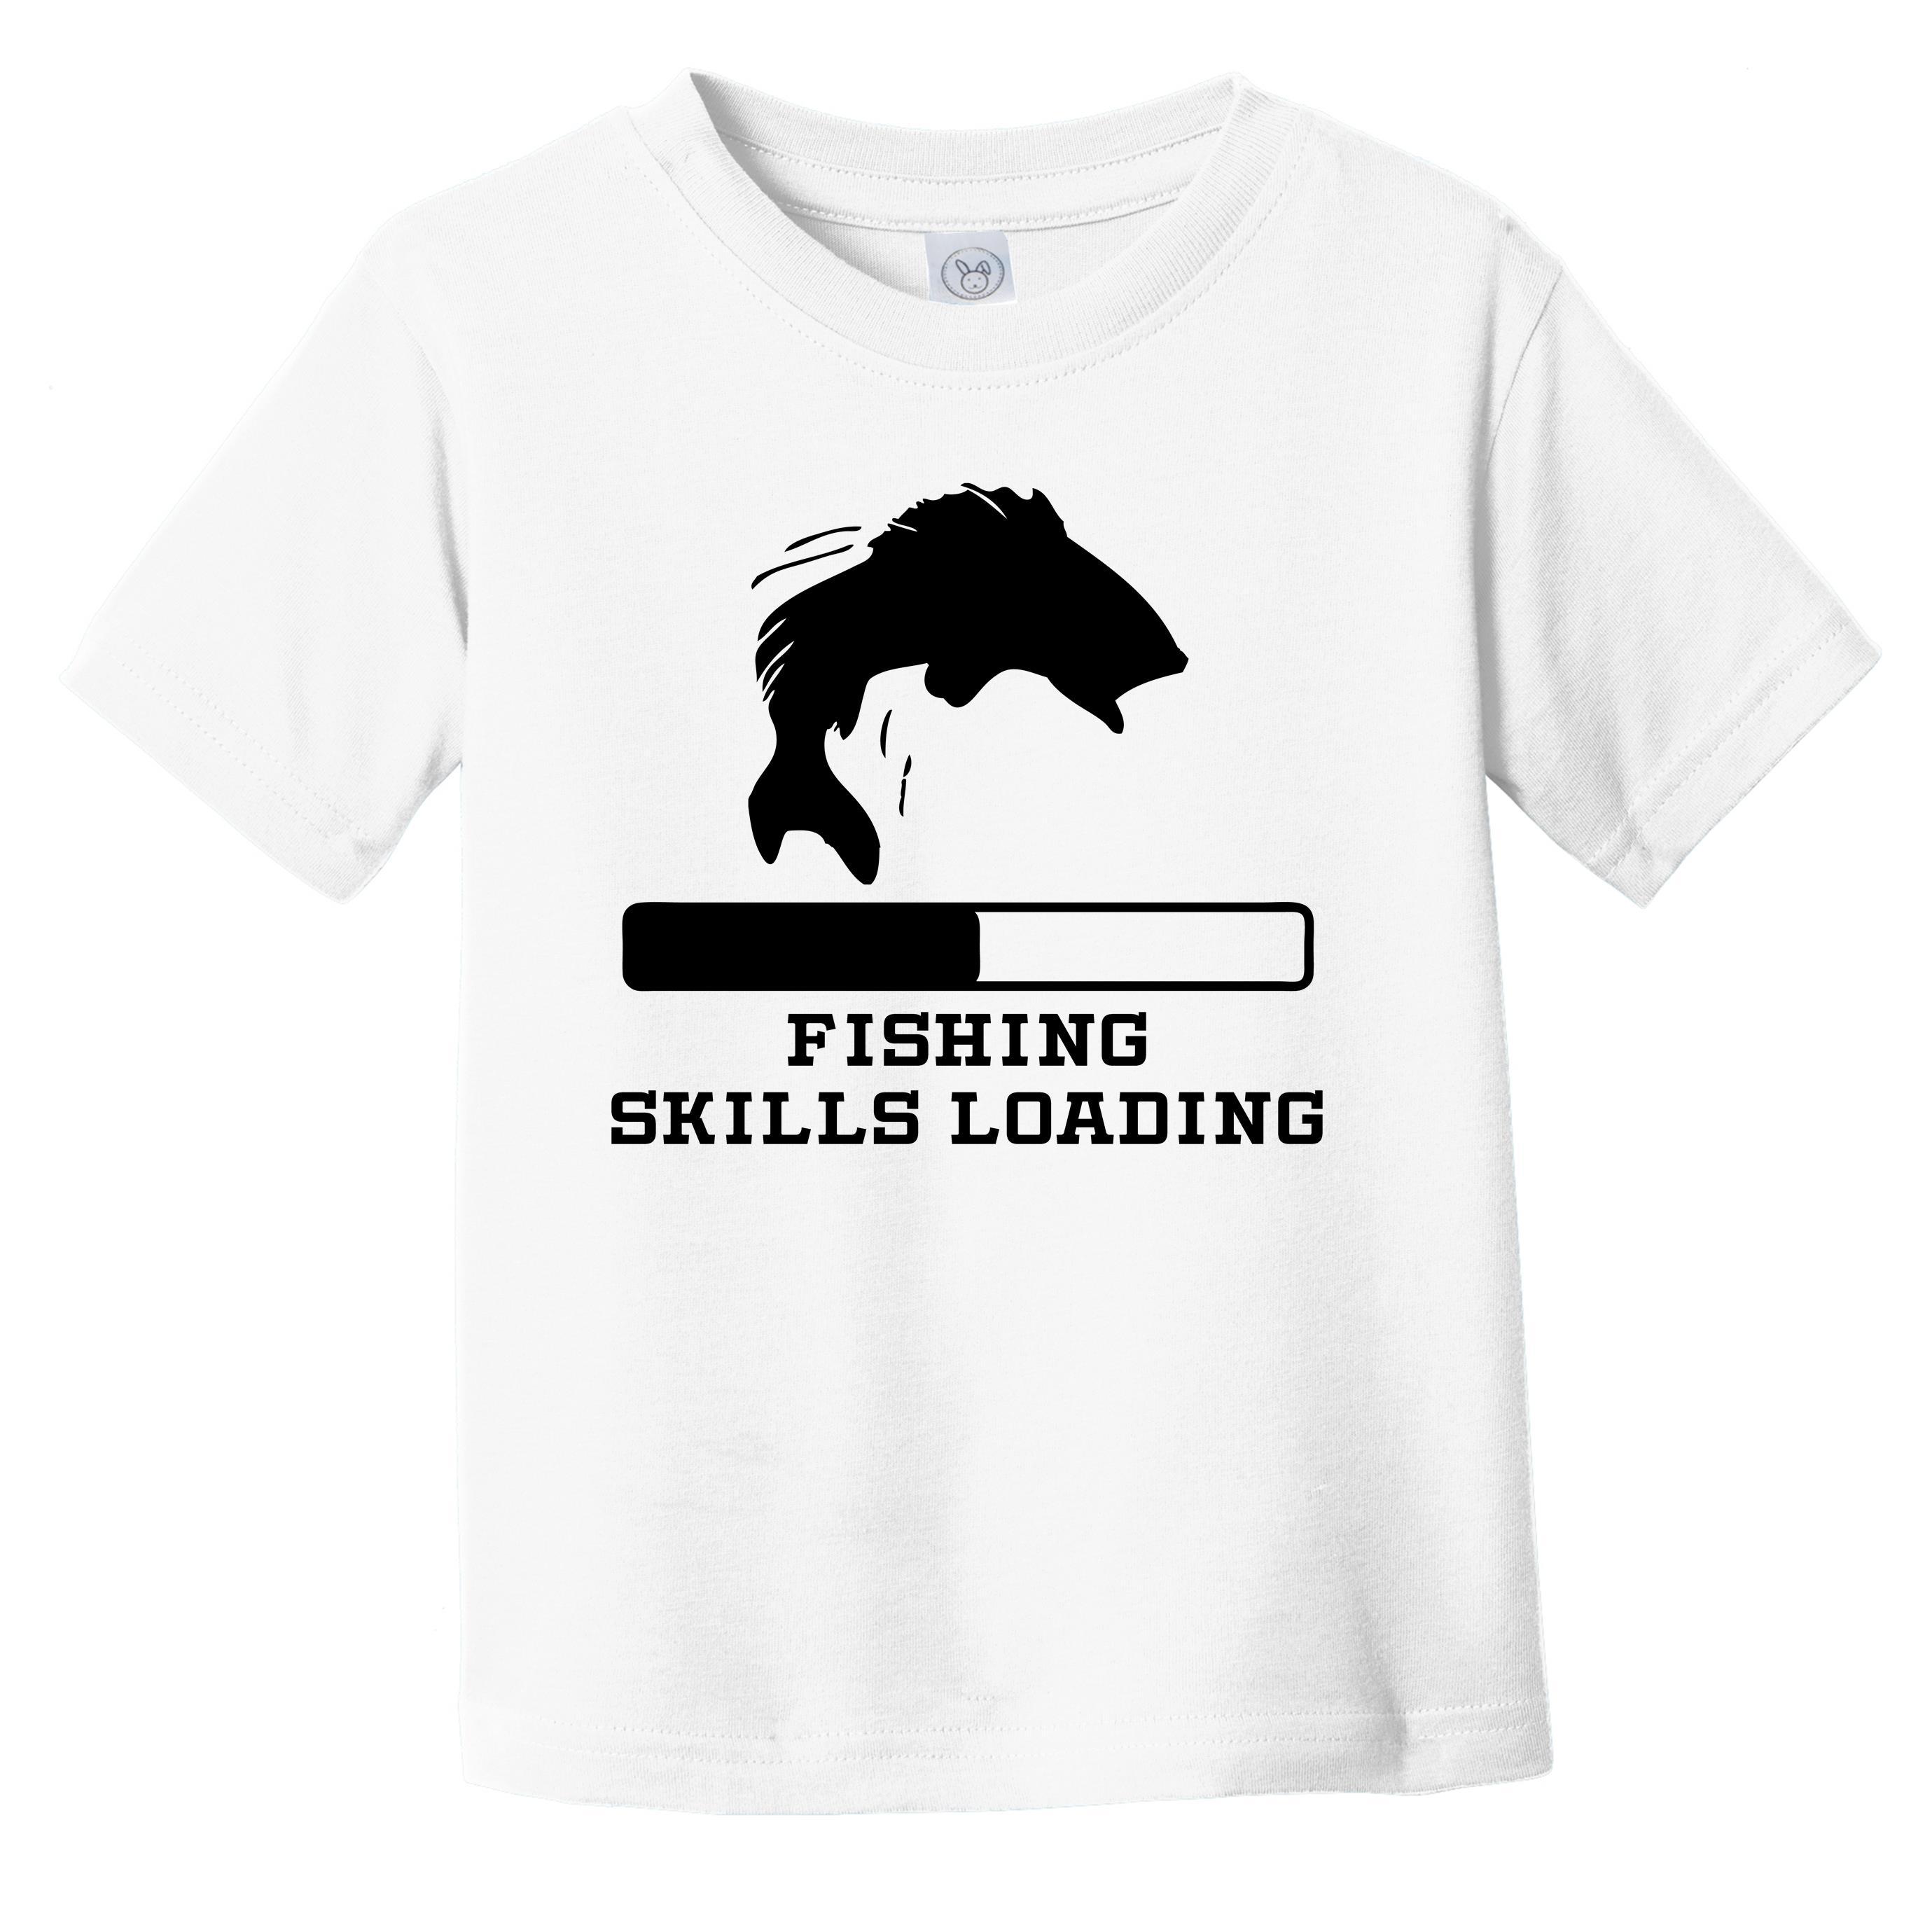 Fishing Skills Loading Funny Sports Humor Infant Toddler T-Shirt 12 Months / White